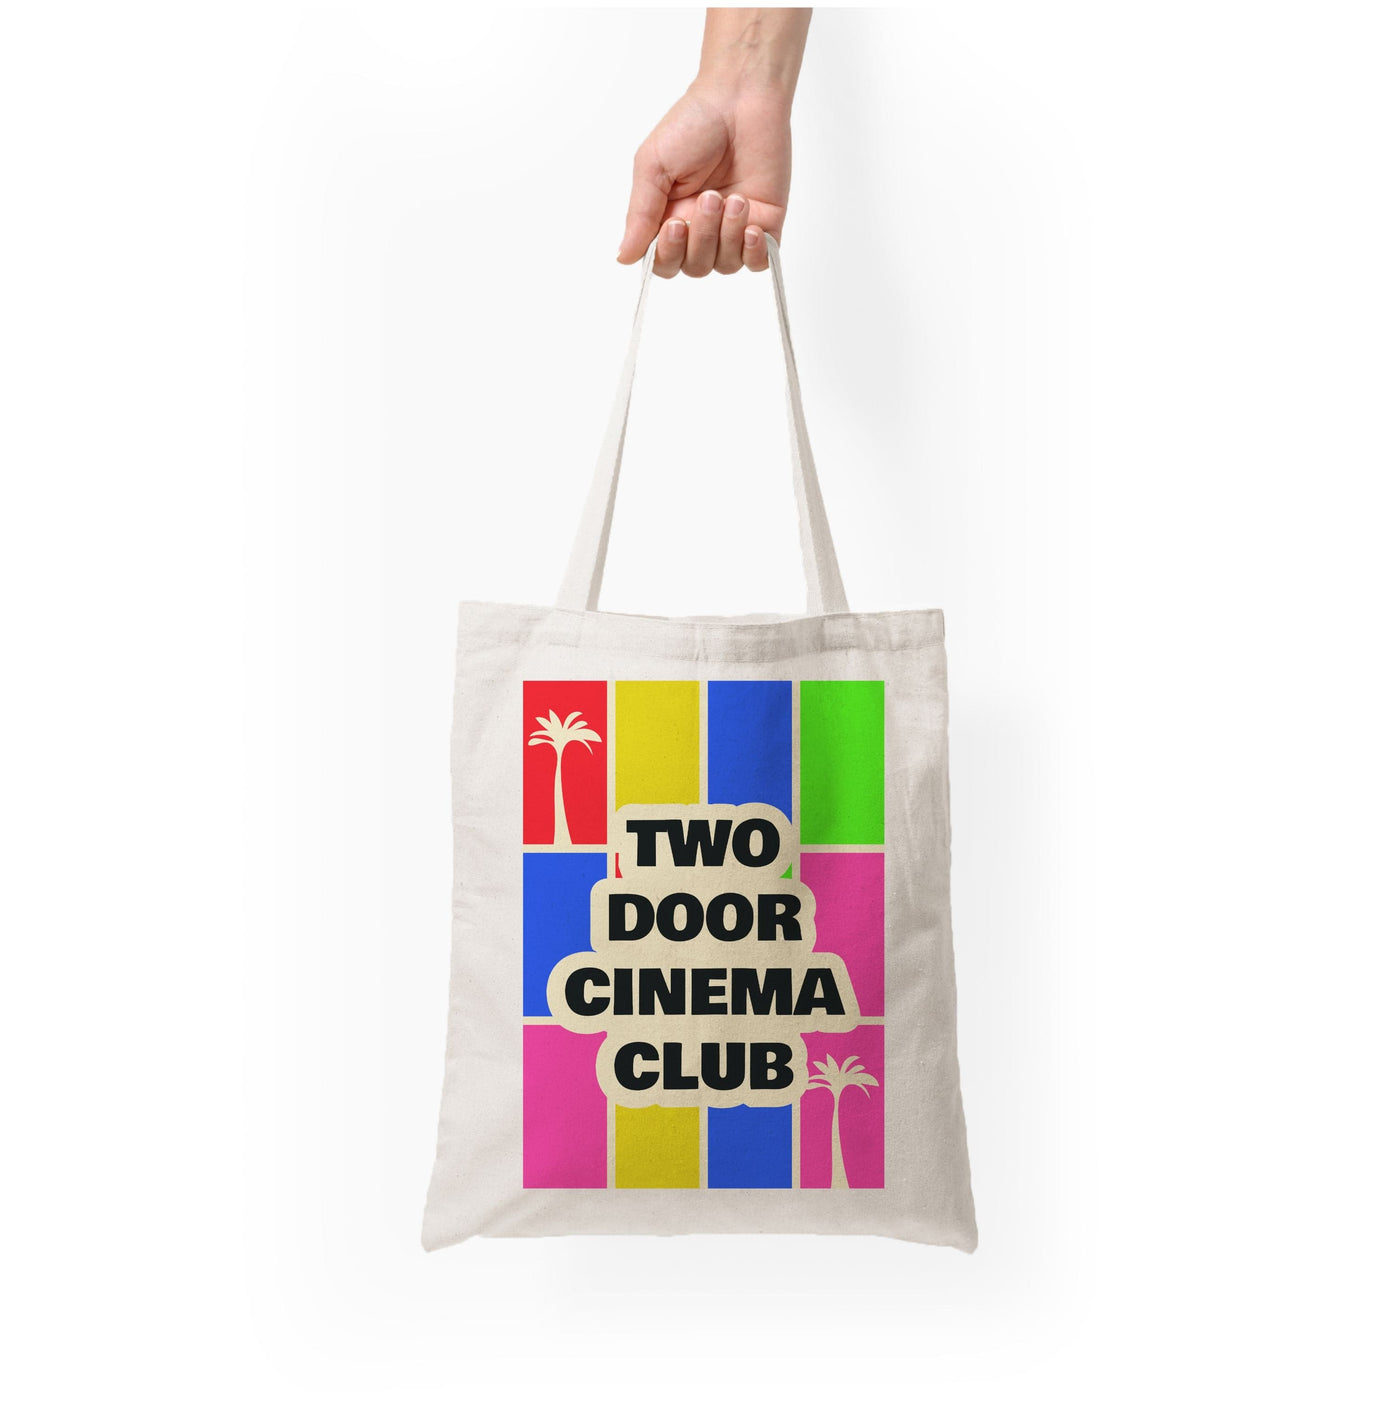 Two Door Cinema Club - Festival Tote Bag